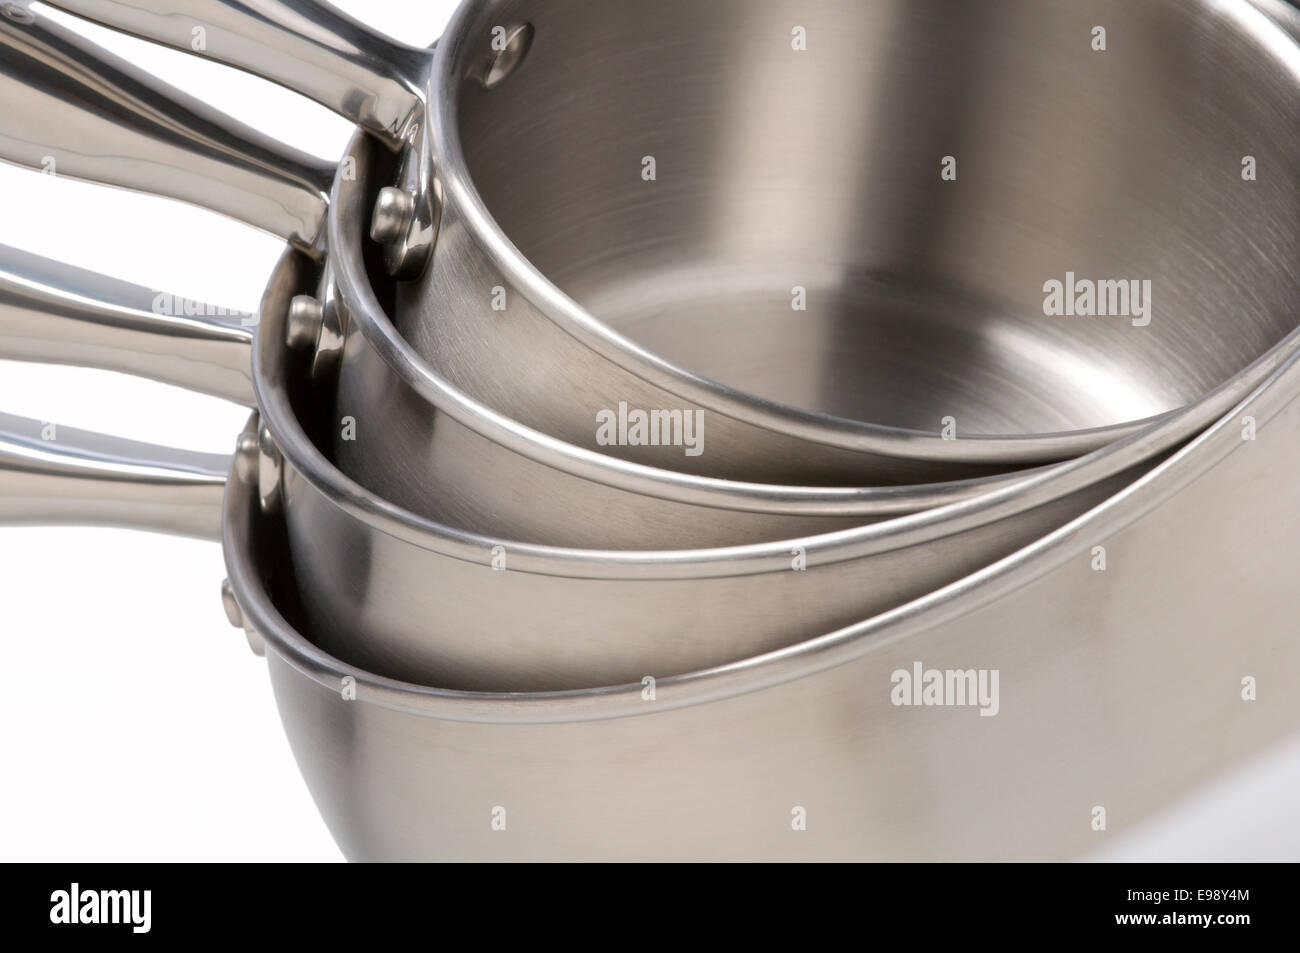 https://c8.alamy.com/comp/E98Y4M/stainless-steel-cooking-pots-E98Y4M.jpg